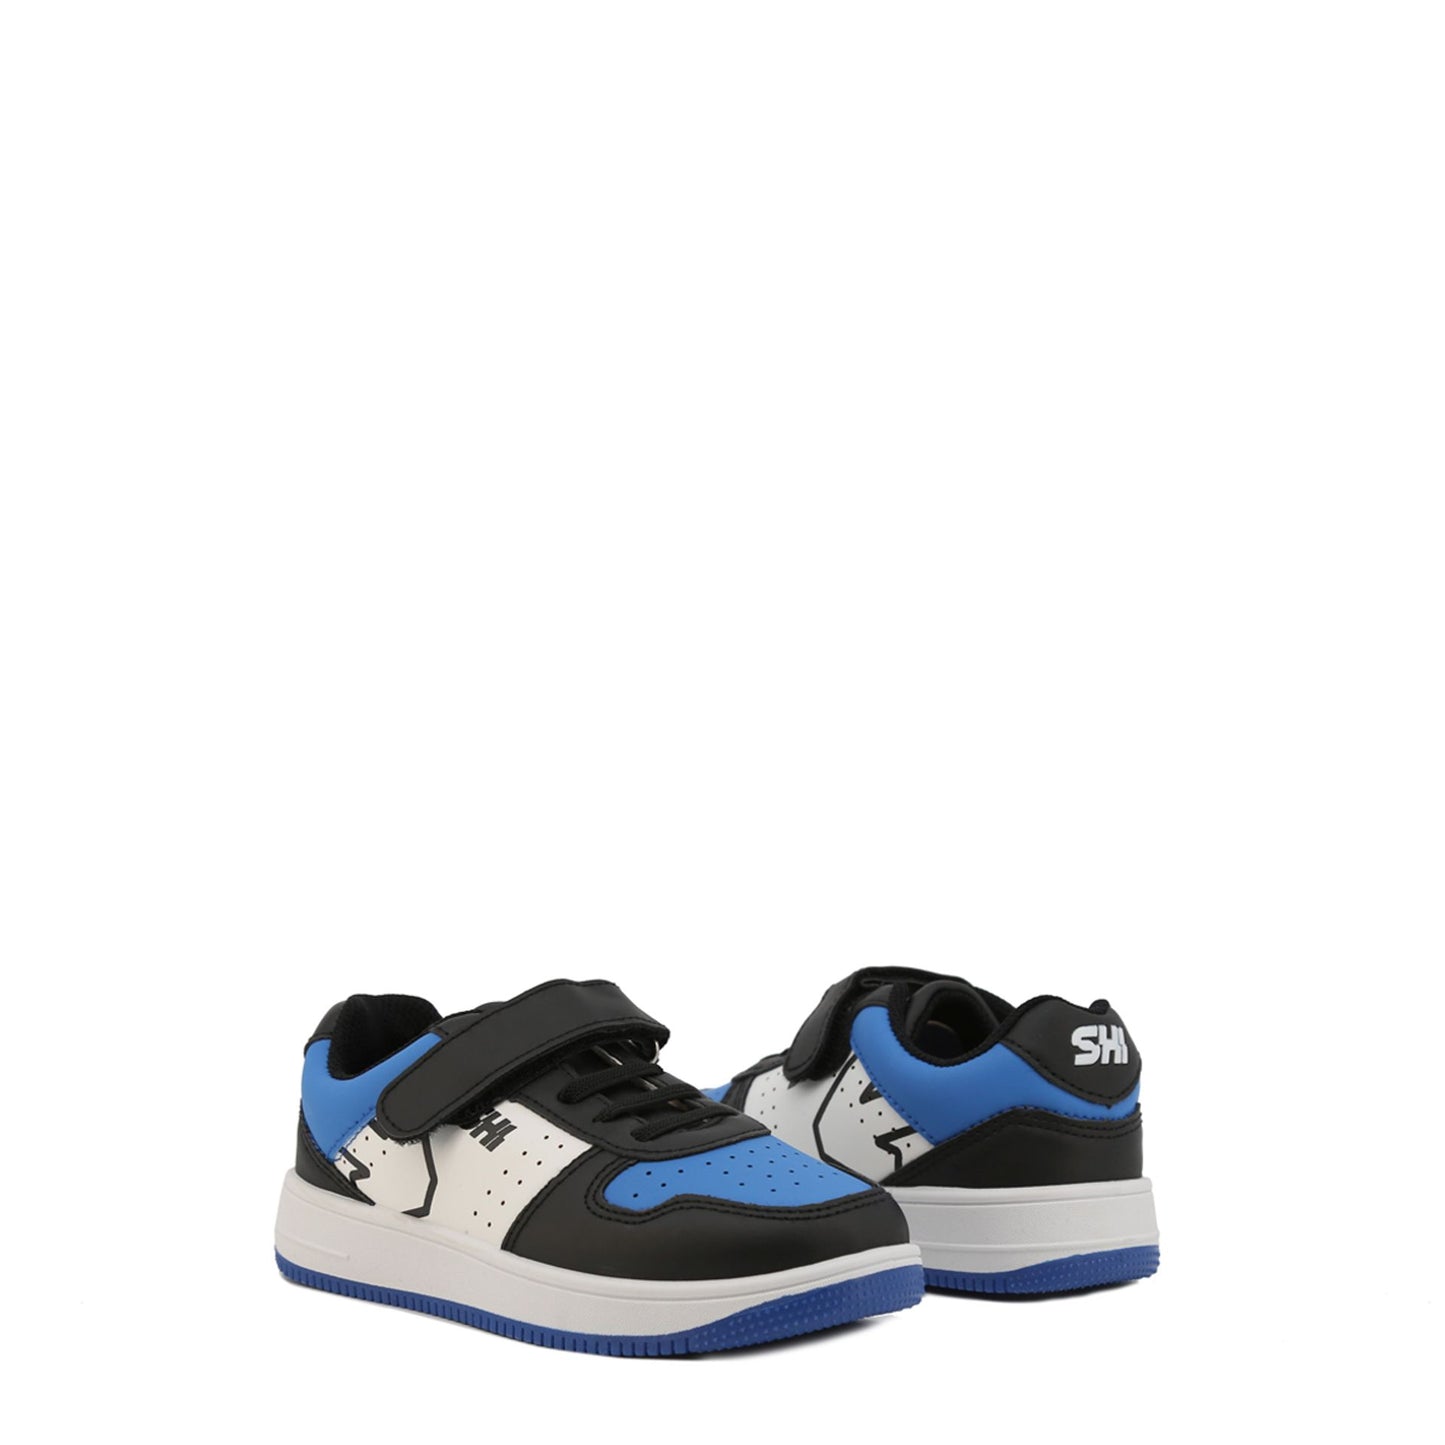 Sneakers con velcro nera e blu, morbida e comoda